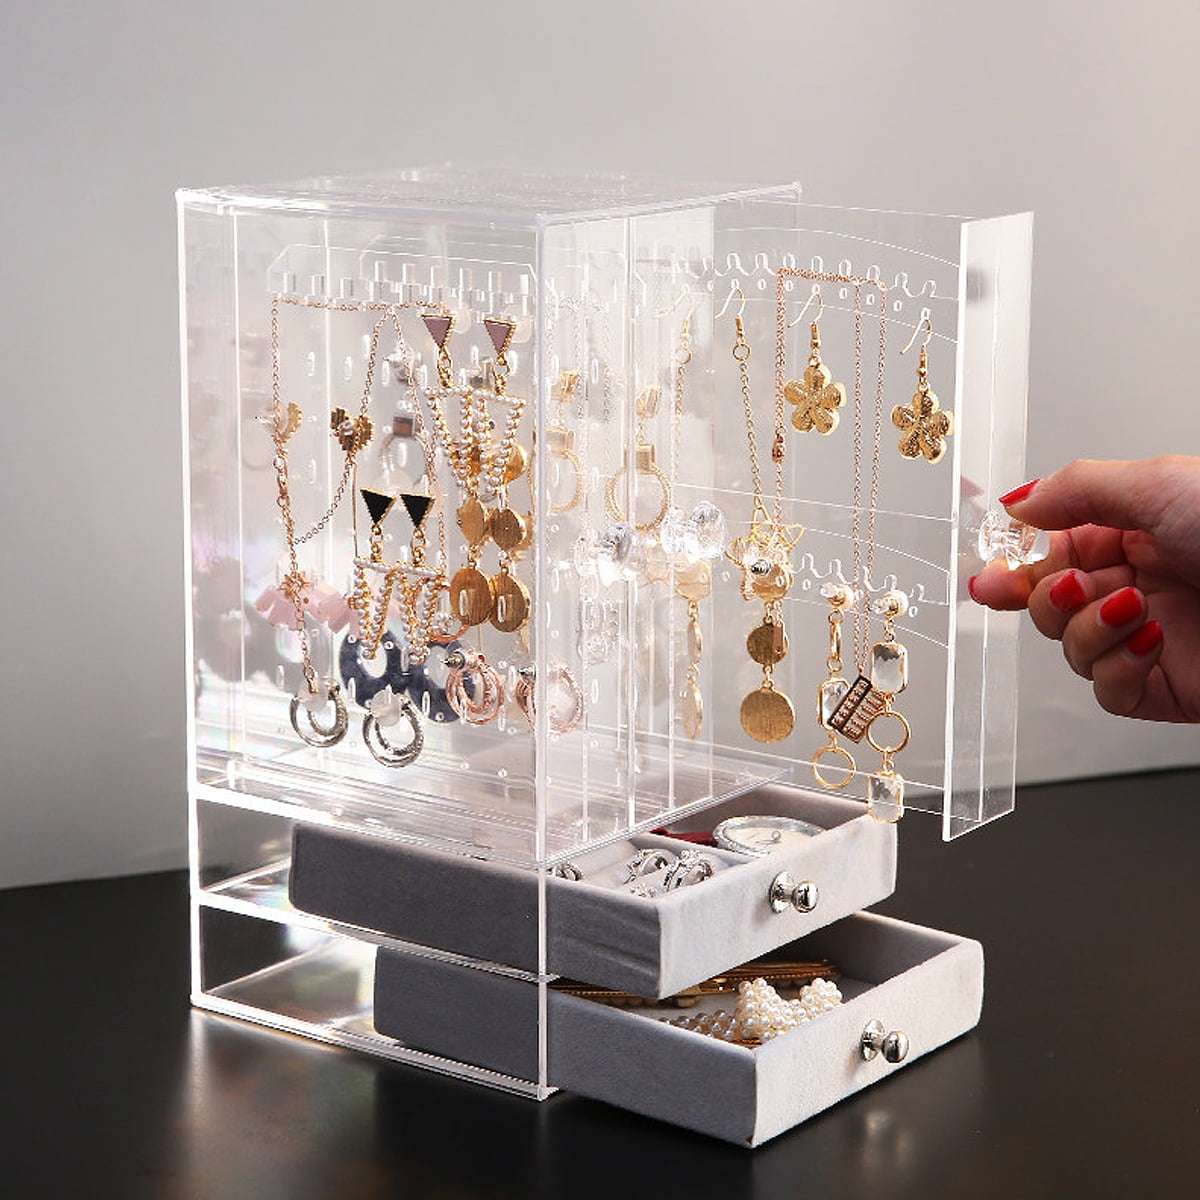 Acrylic Necklace Bracelet Jewelry Storage Holder Display Stand Rack Show Case FI 